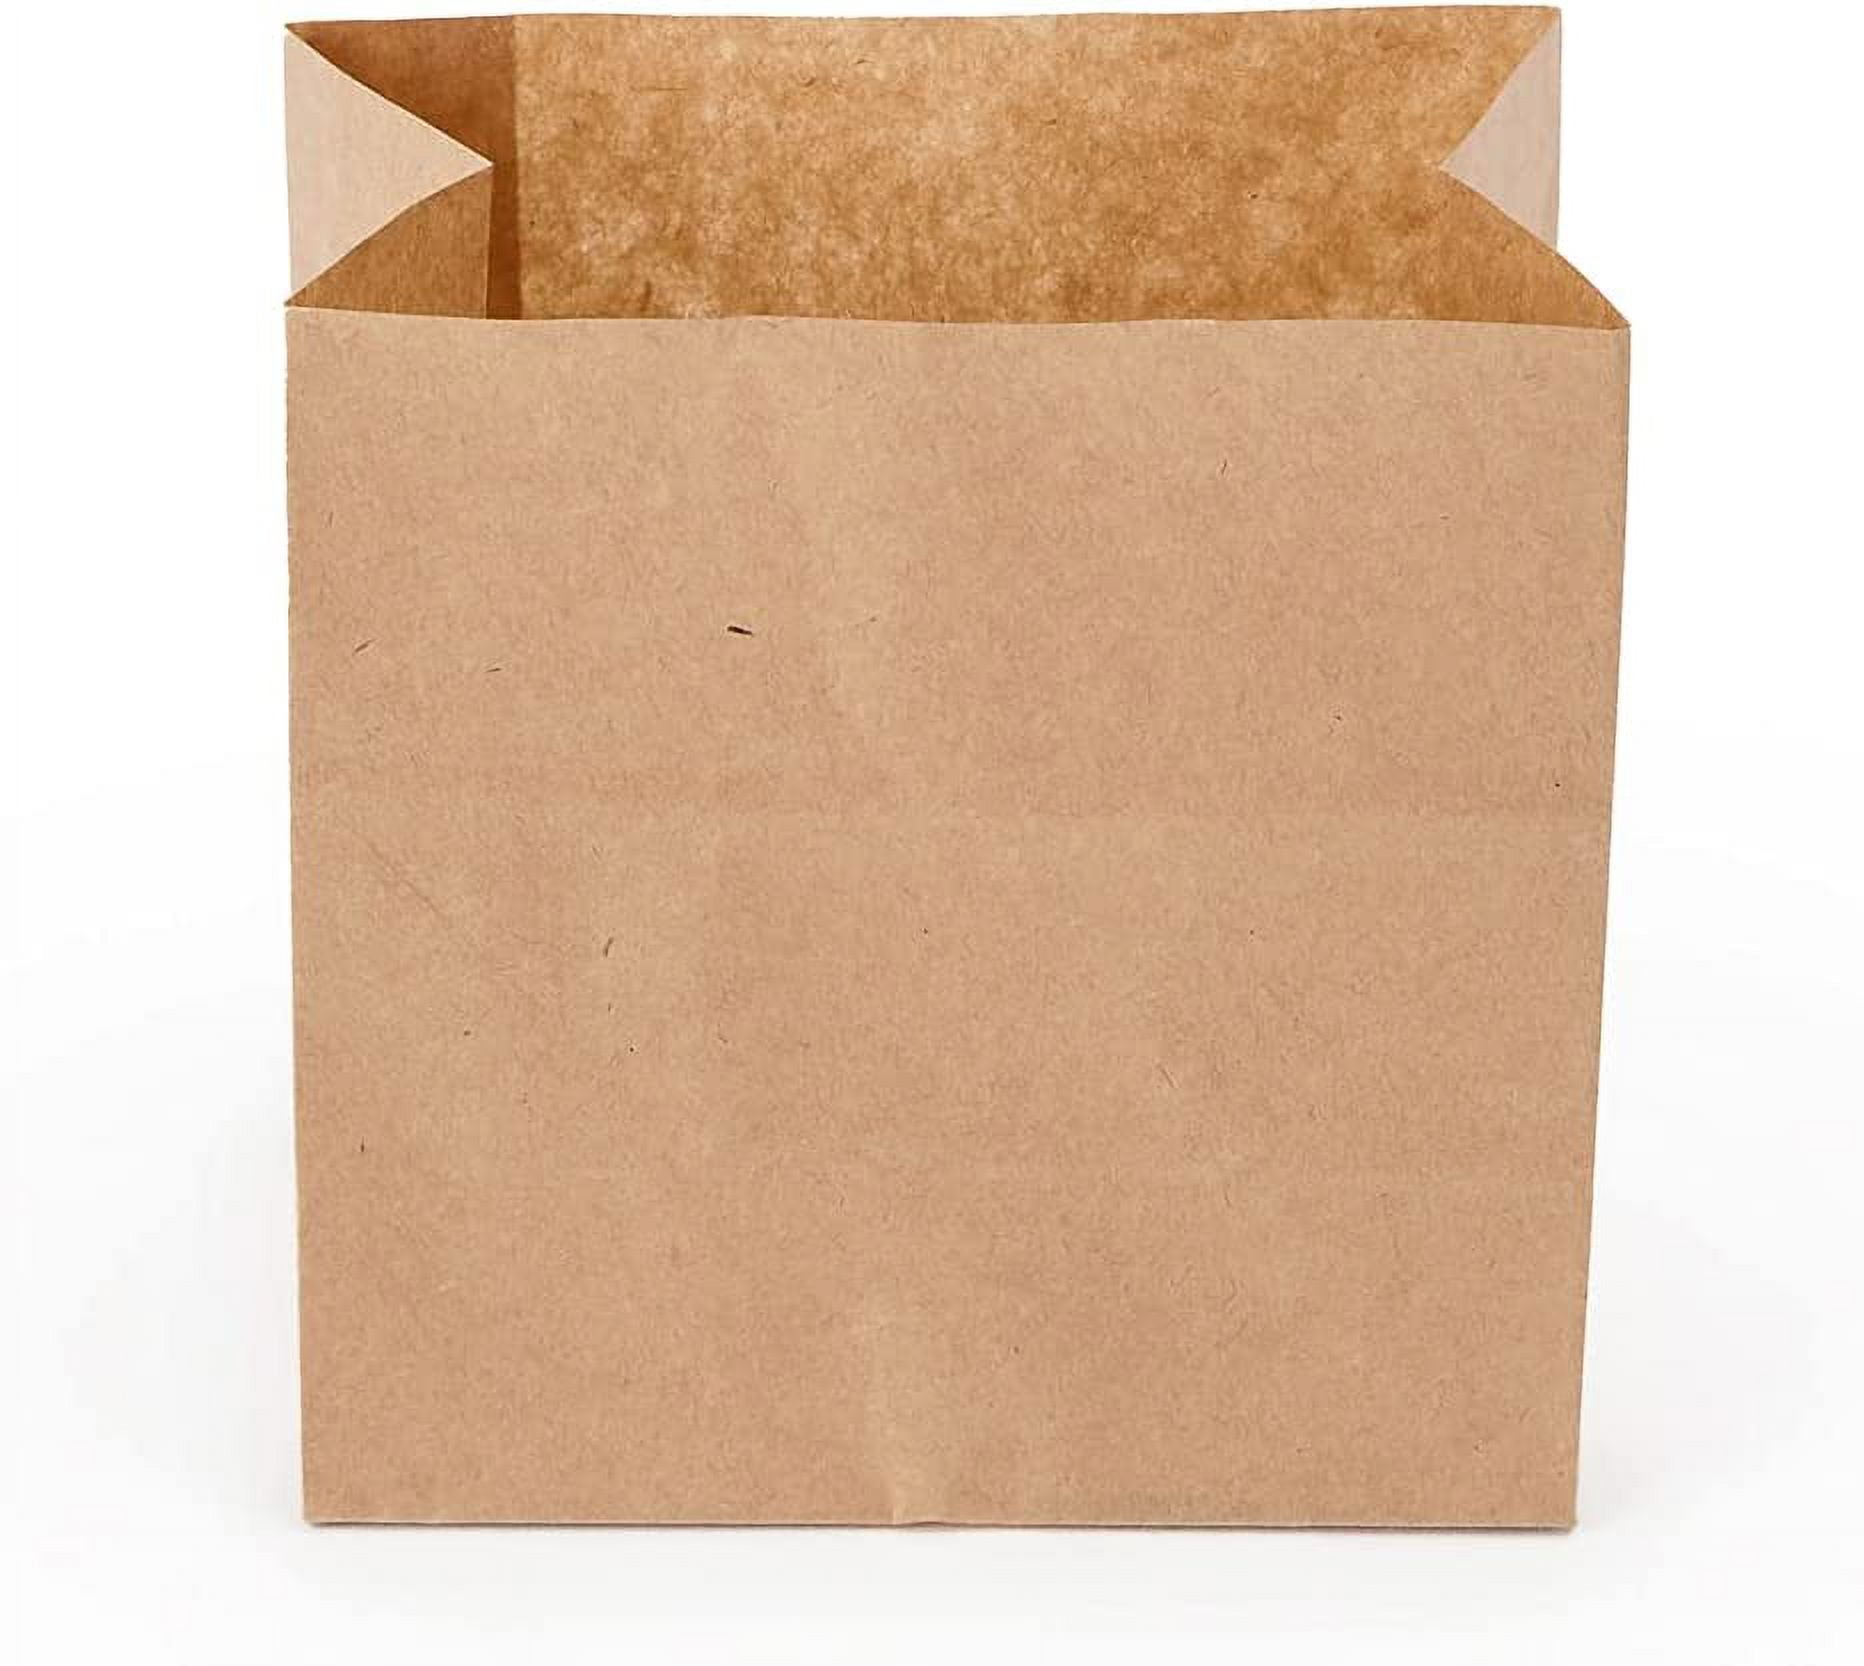 Bag Tek 4.25 x 2.5 x 3.75 Paper Bags for Snacks, 100 Large Paper Bag for Foods - Disposable, Greaseproof, Paper Kraft Snack Bags, for Popcorn, Cook